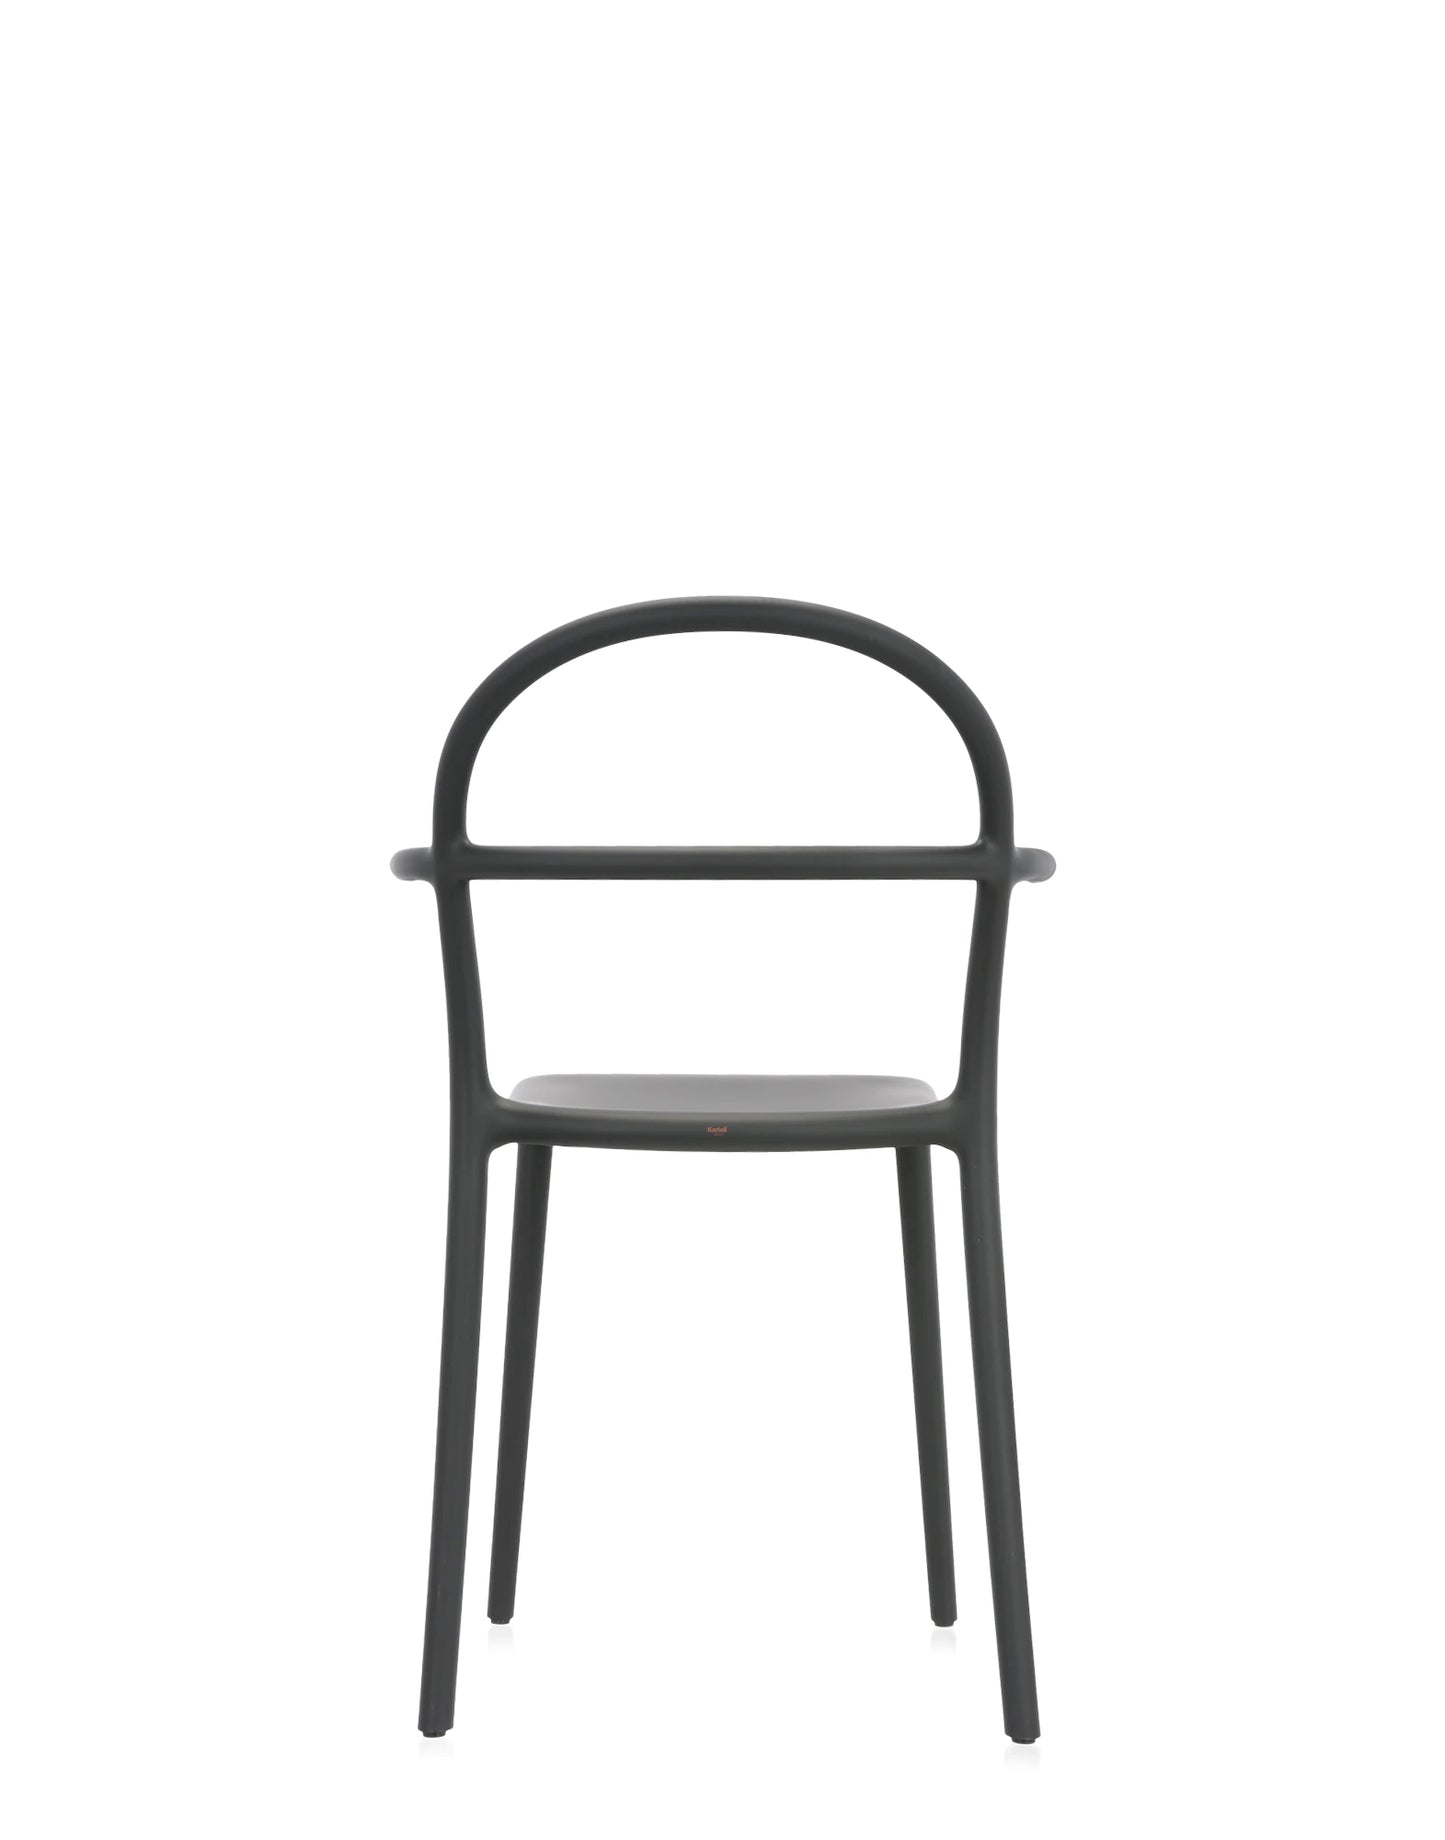 C Chair in Black, Set of 2